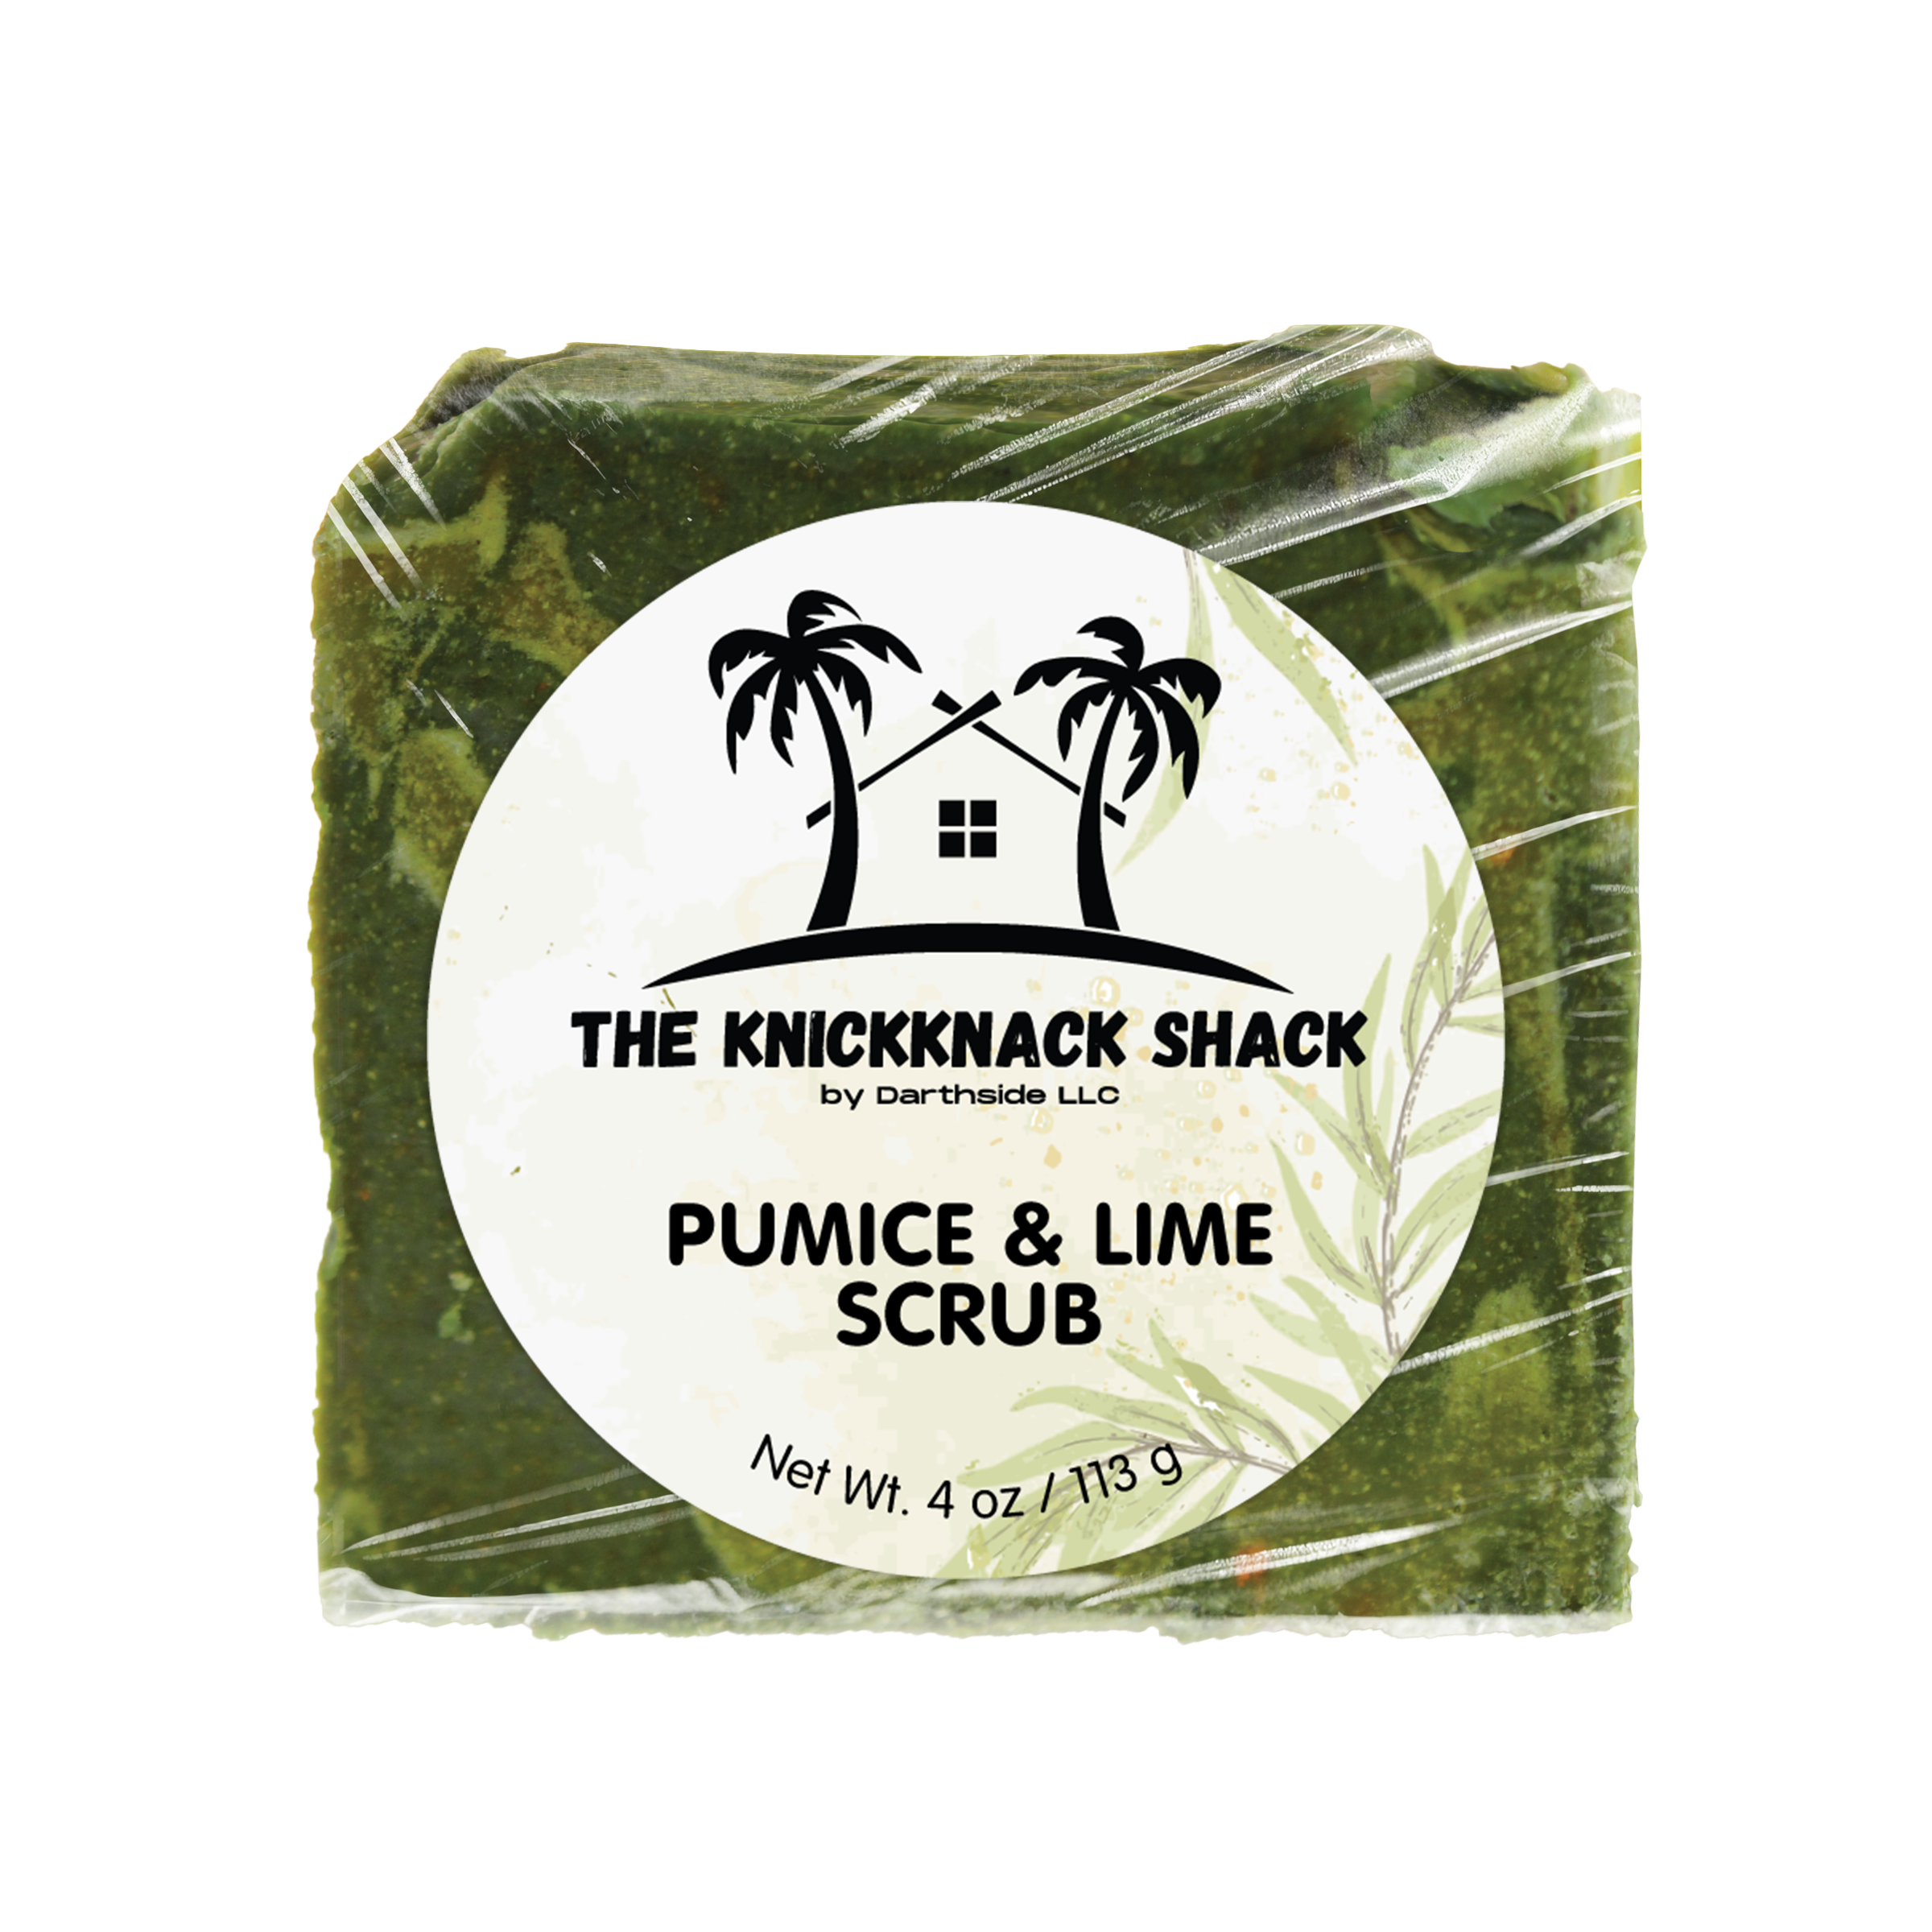 Pumice & Lime Scrub